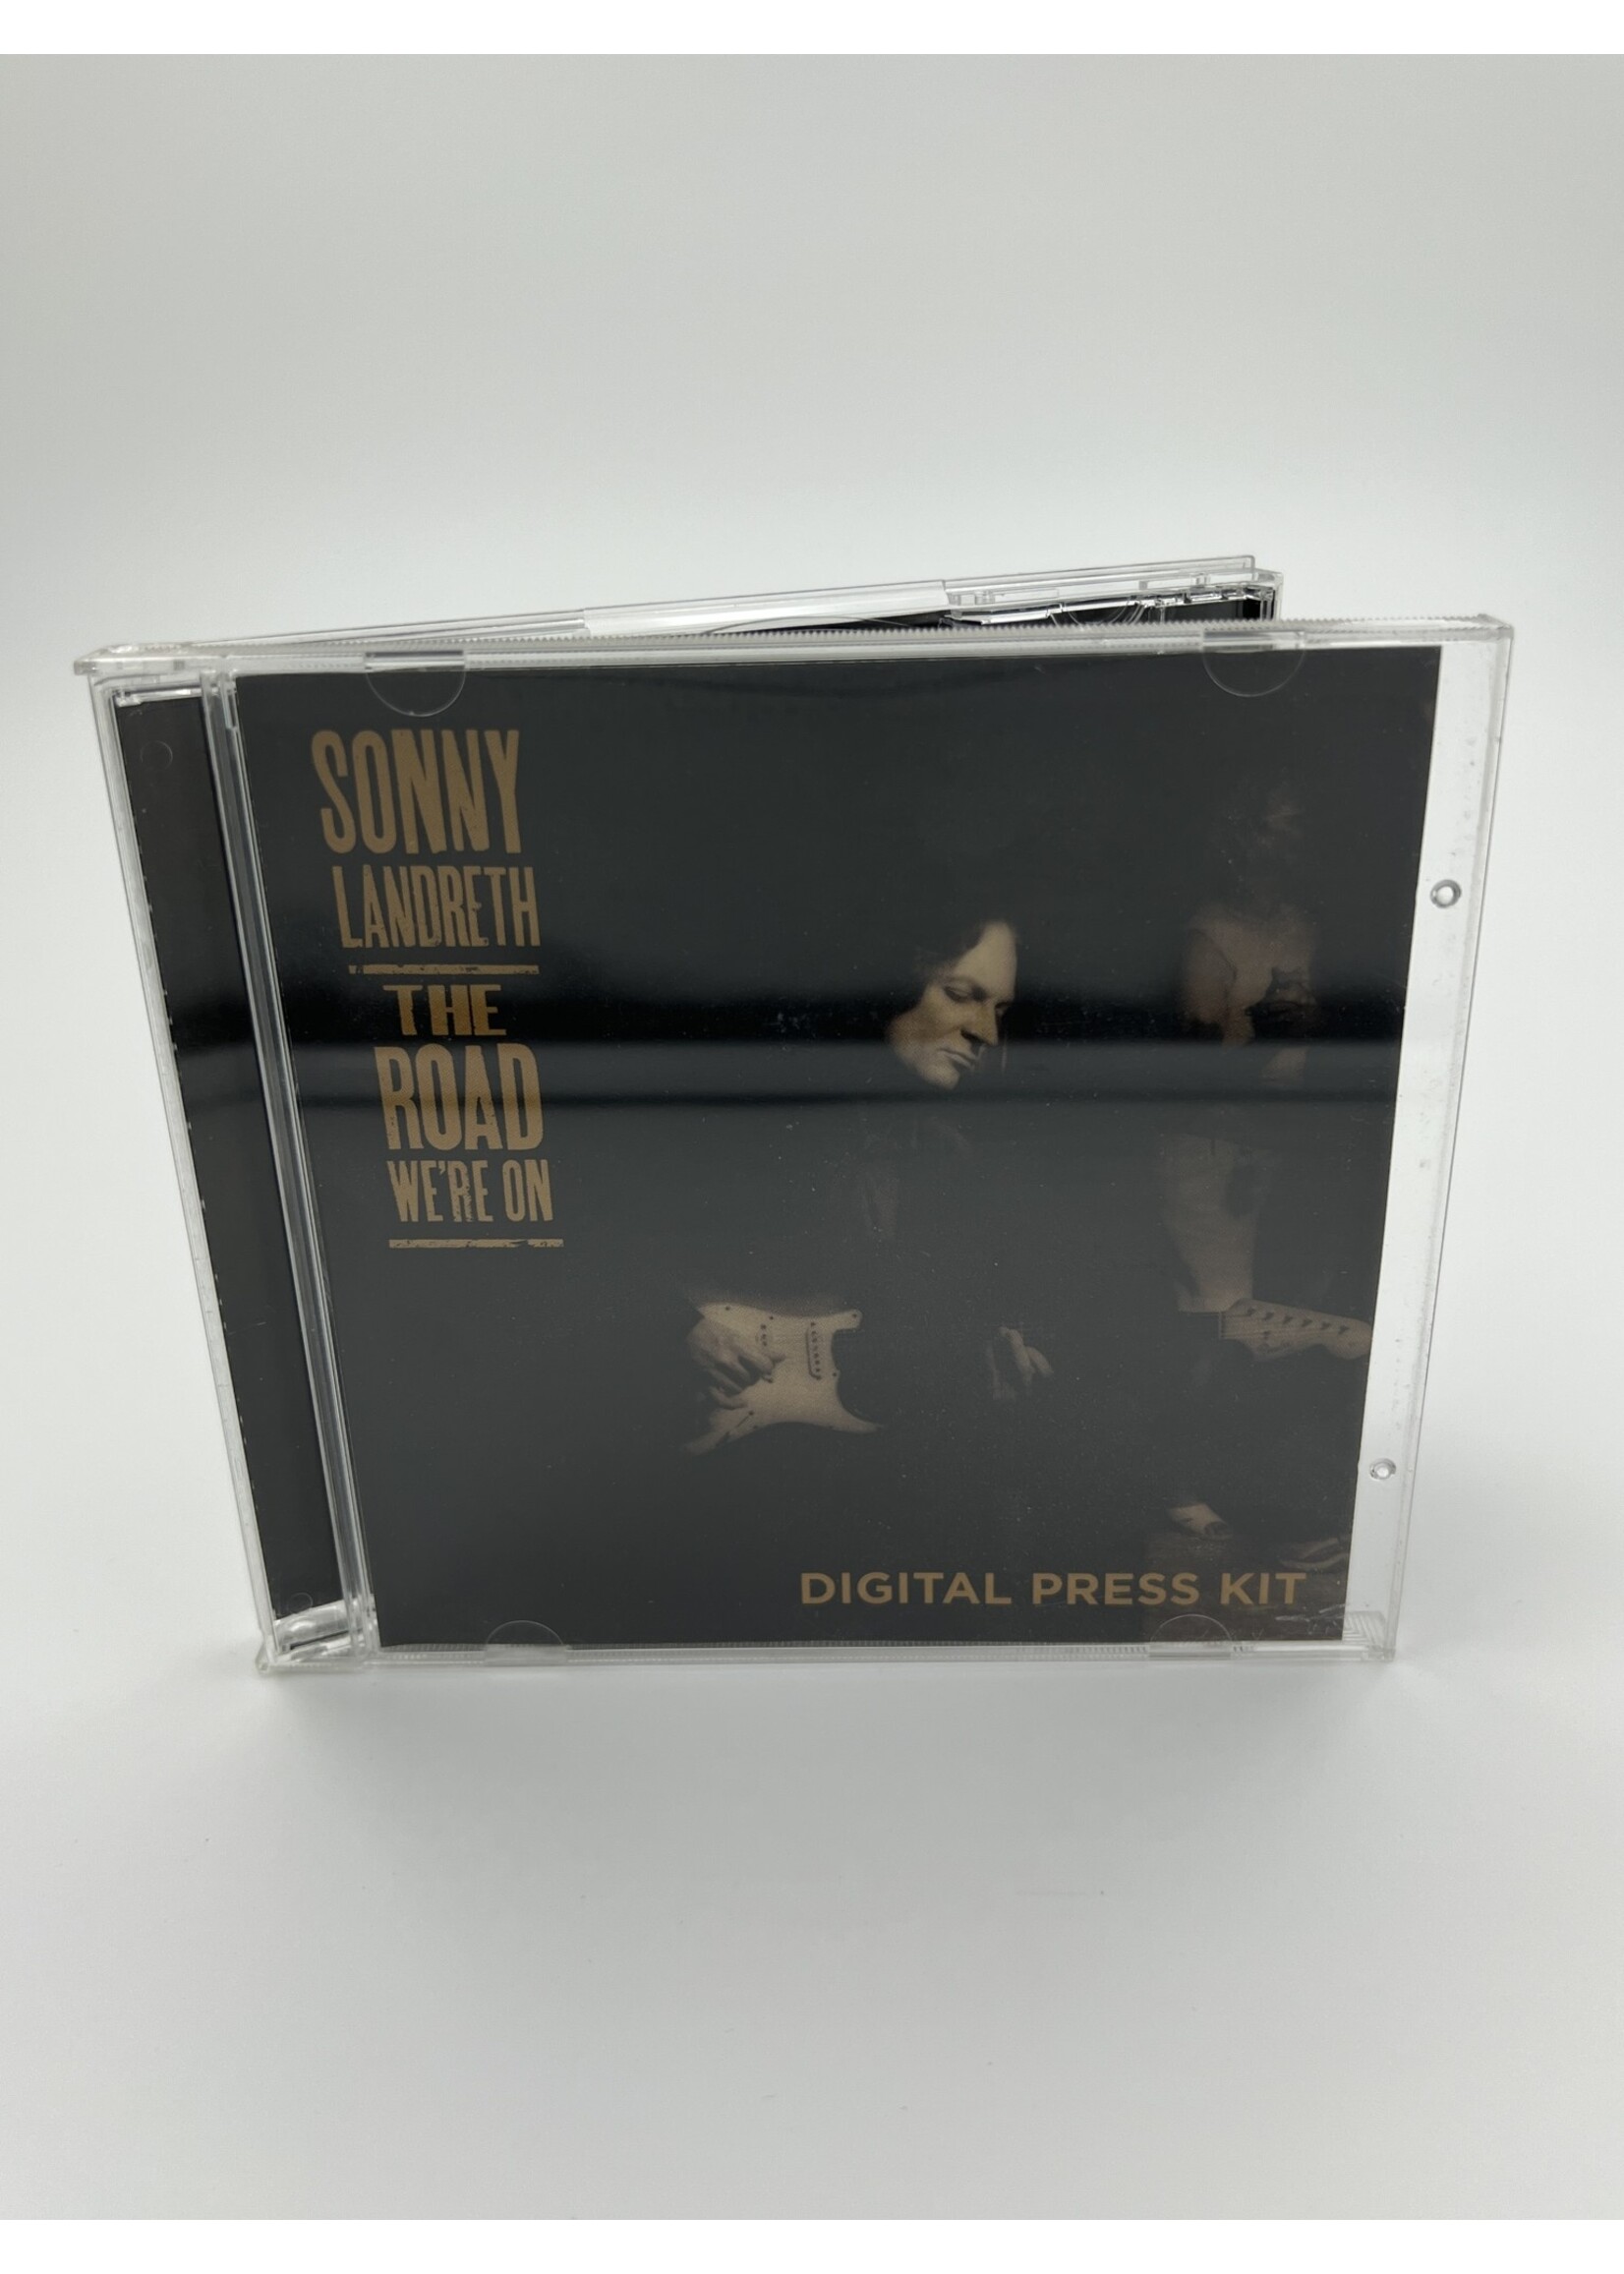 CD Sonny Landreth The Road Were On Digital Press Kit CD